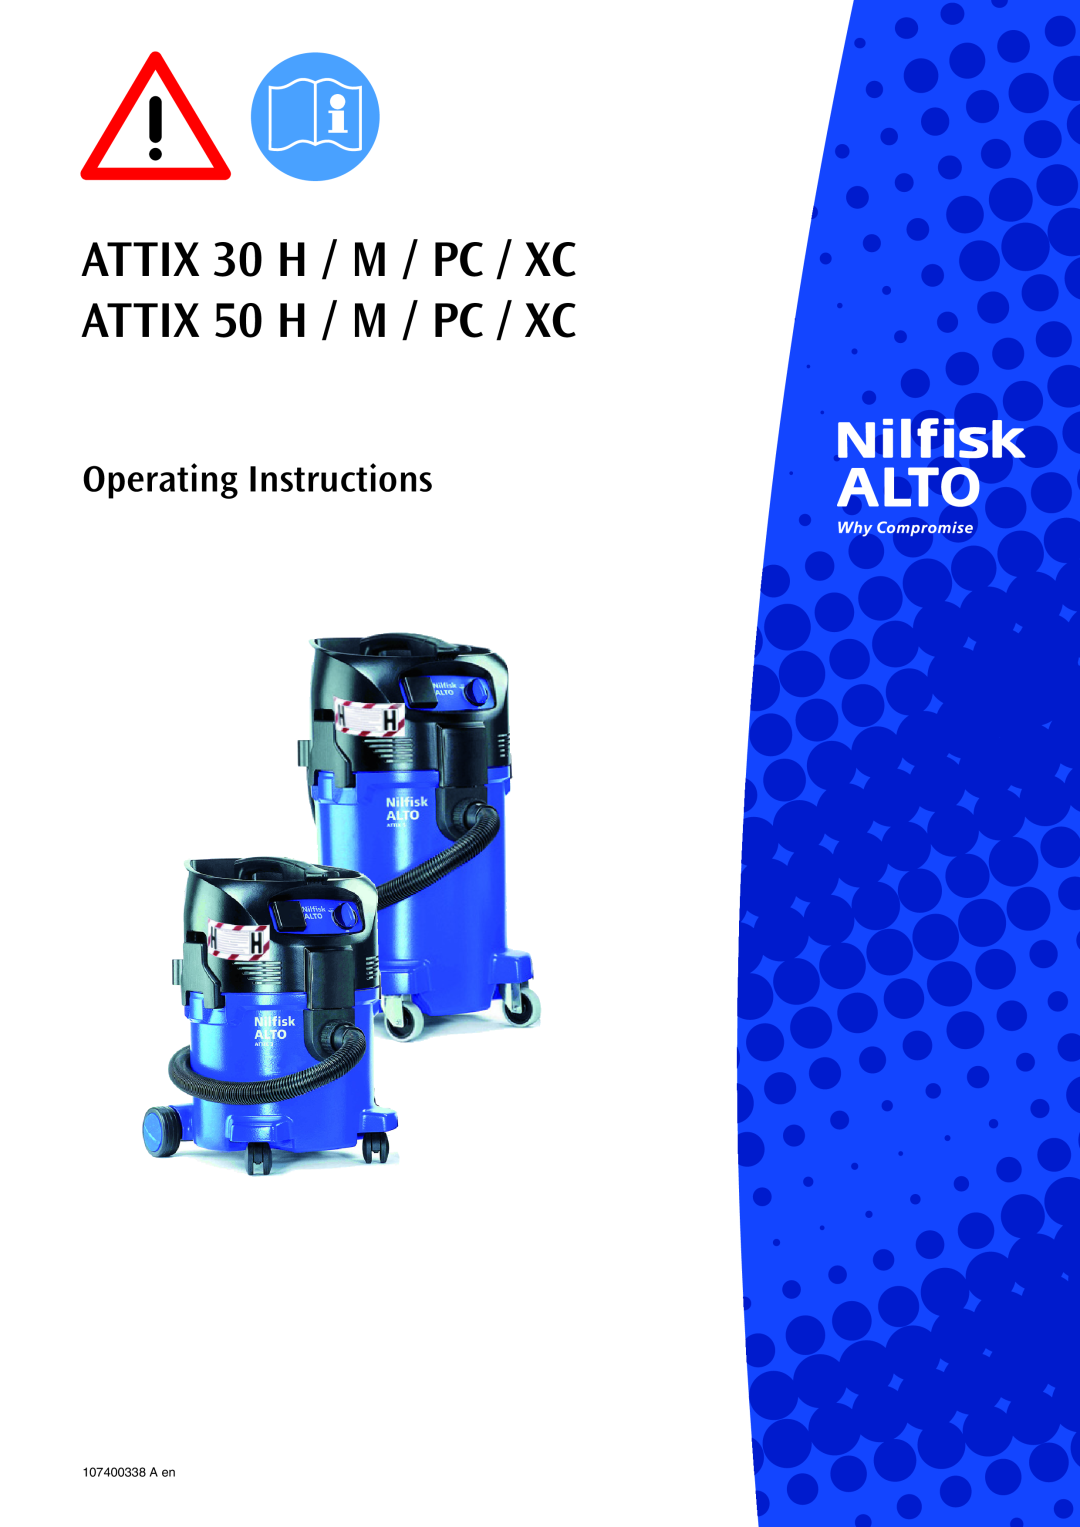 Nilfisk-ALTO operating instructions ATTIX 30 H / M / PC / XC ATTIX 50 H / M / PC / XC, Operating Instructions, A en 